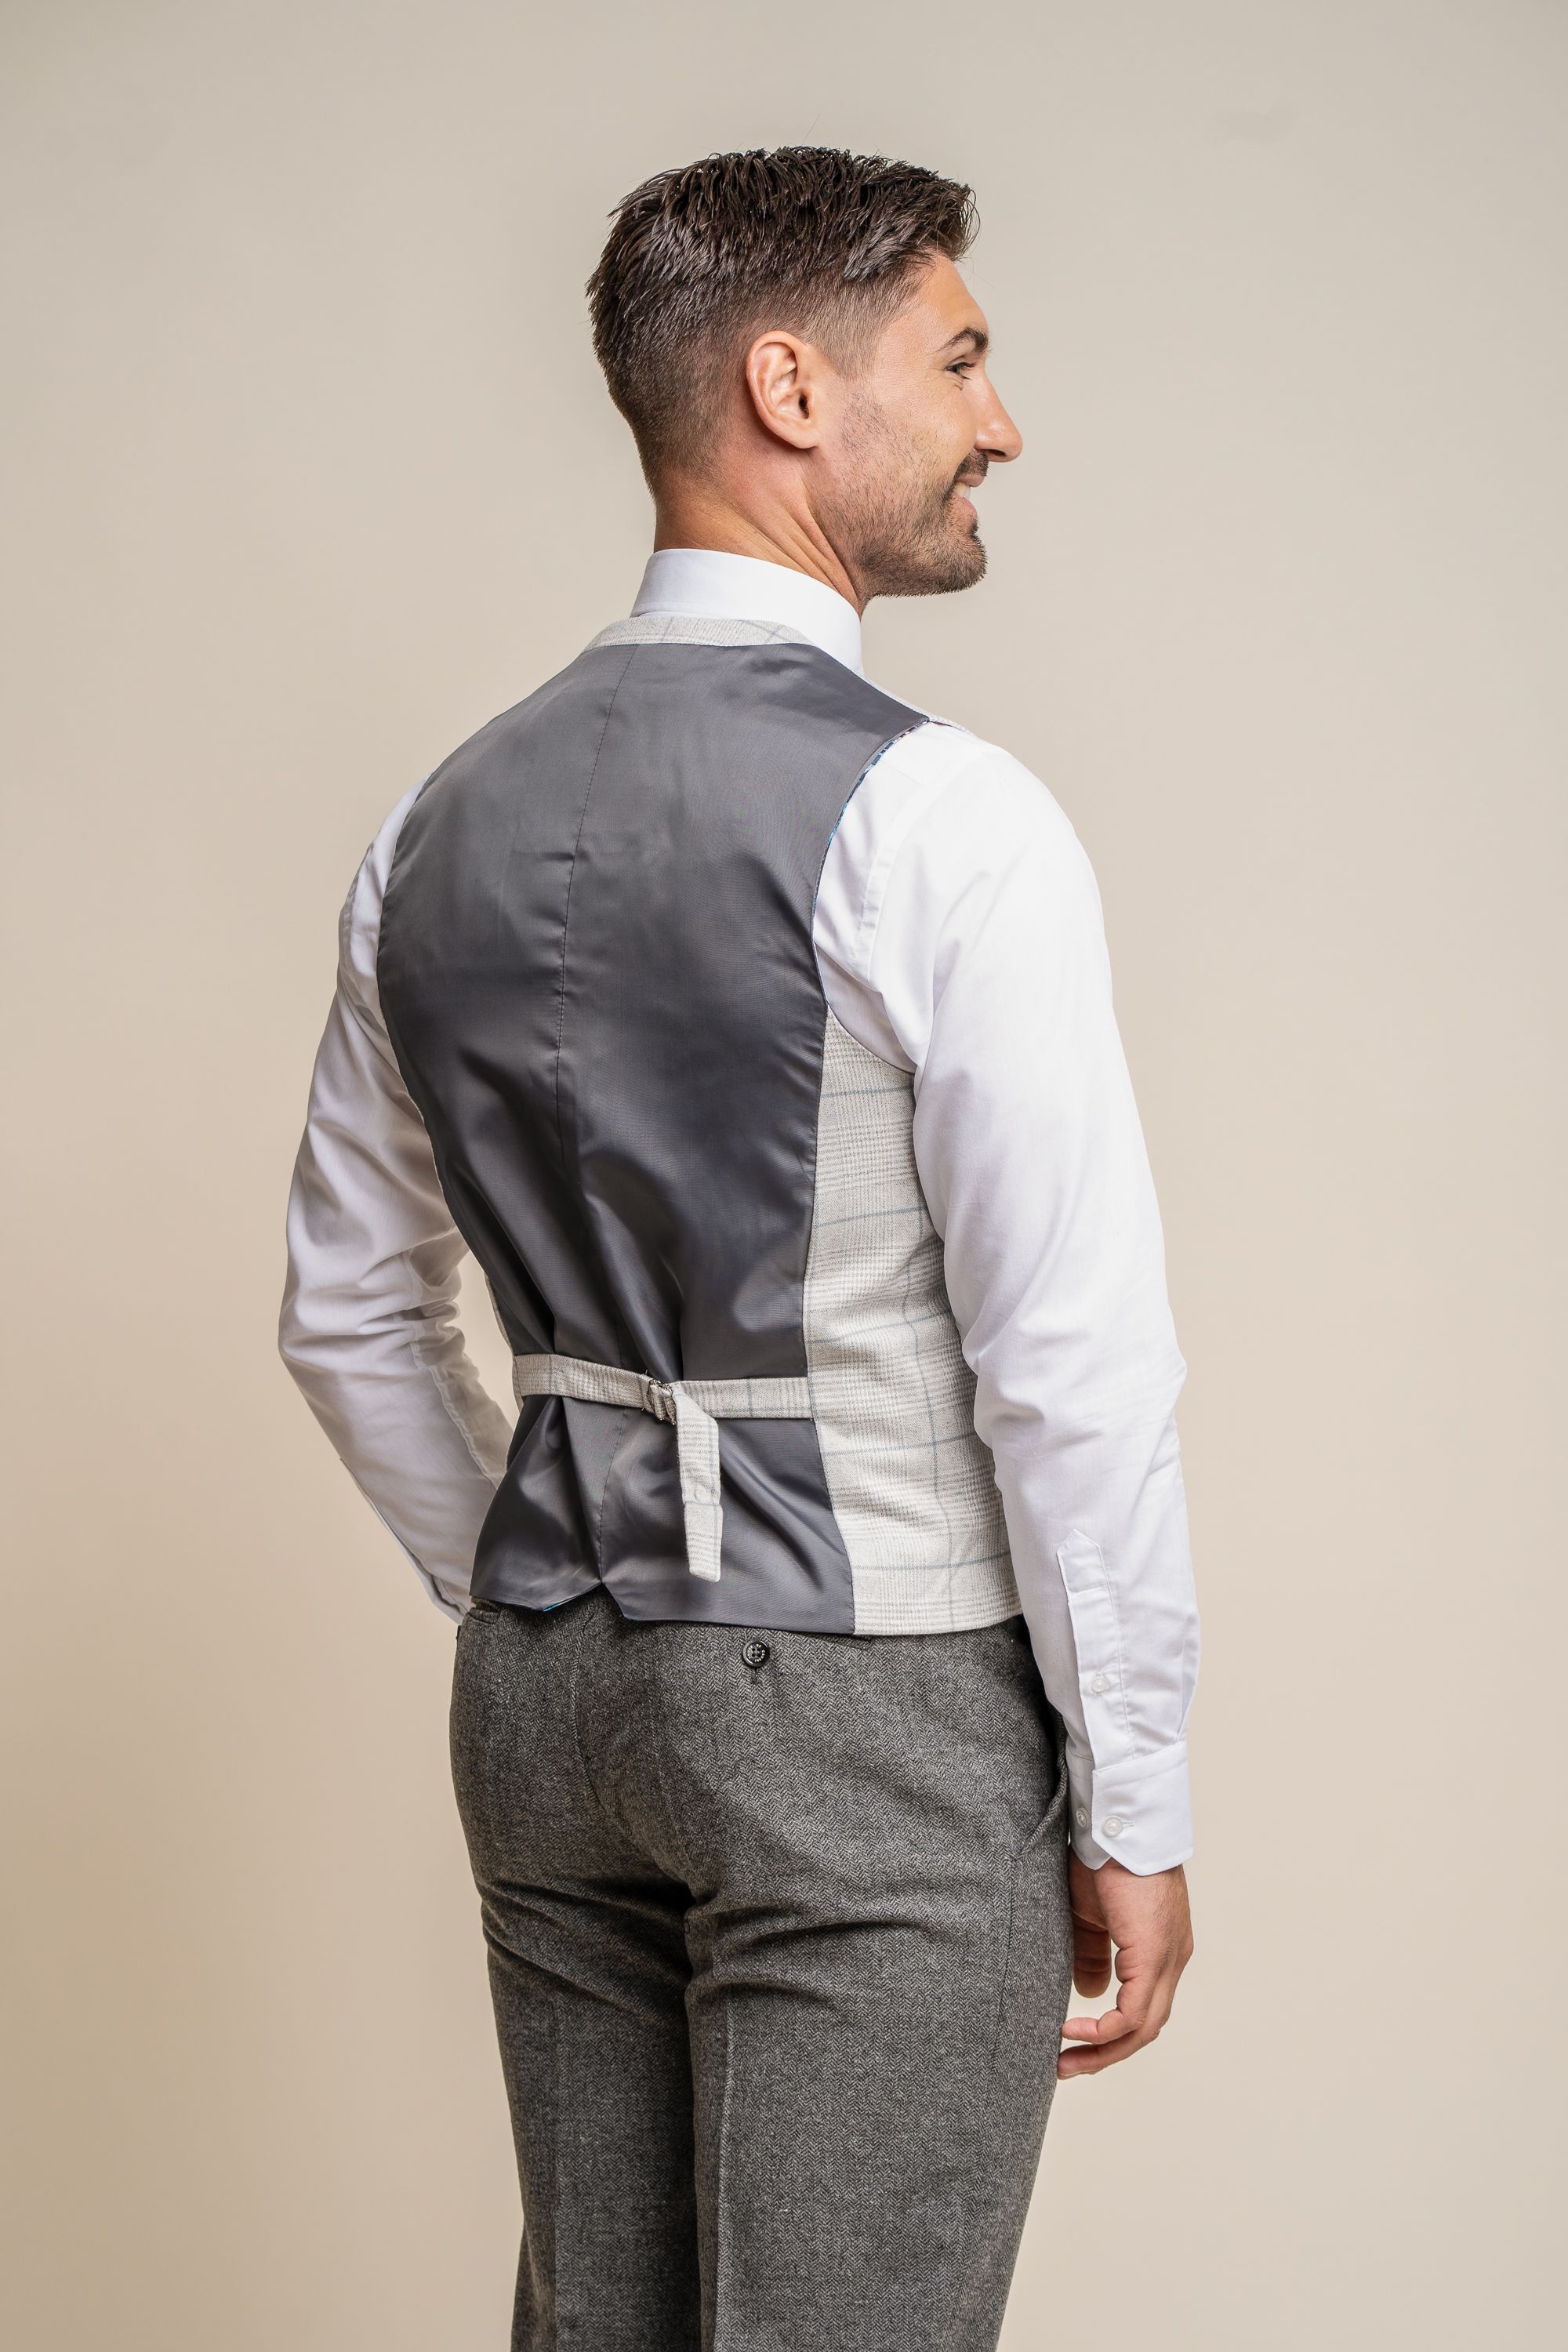 Men's Herringbone Suit with Double-breasted Waistcoat - Combined Set Martez Radika